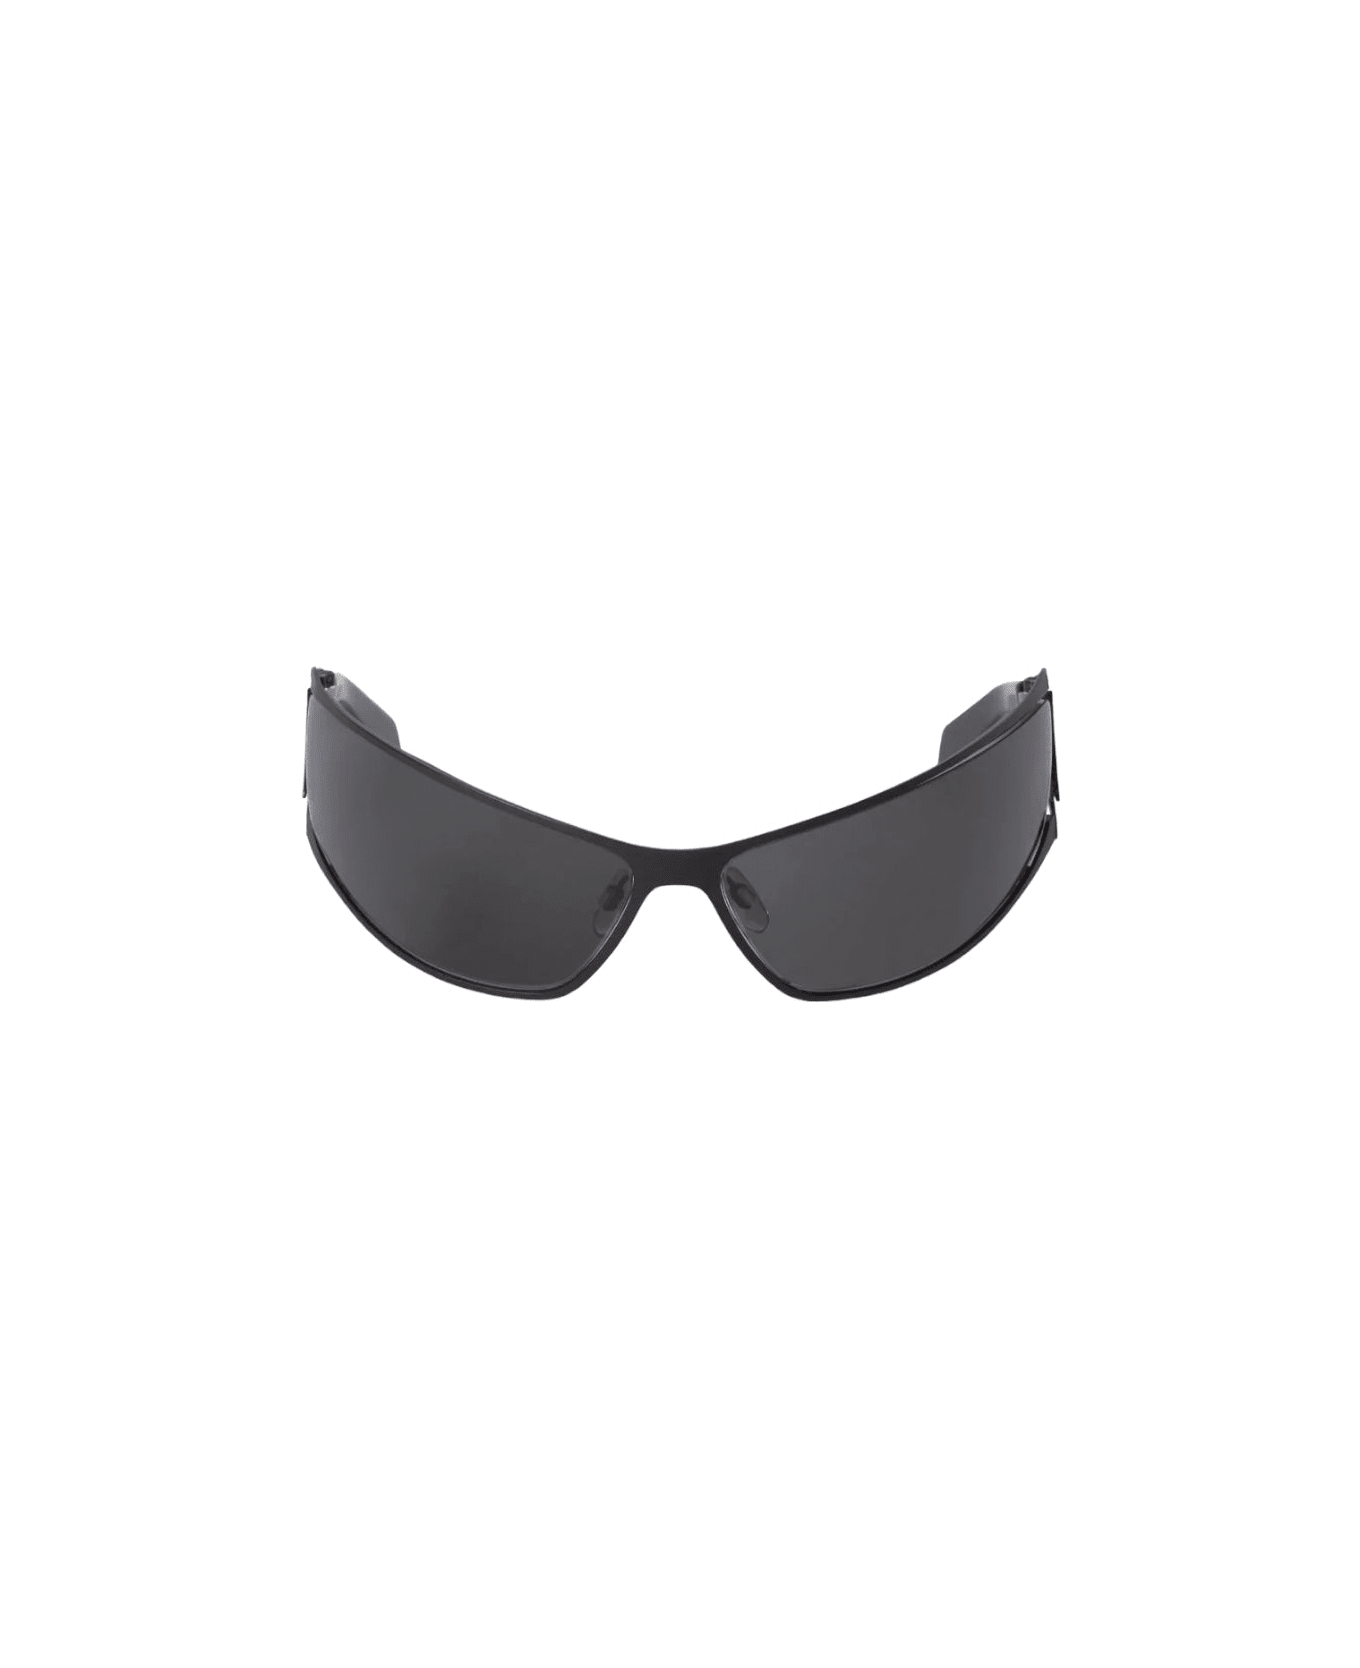 Off-White Luna - Black Sunglasses サングラス